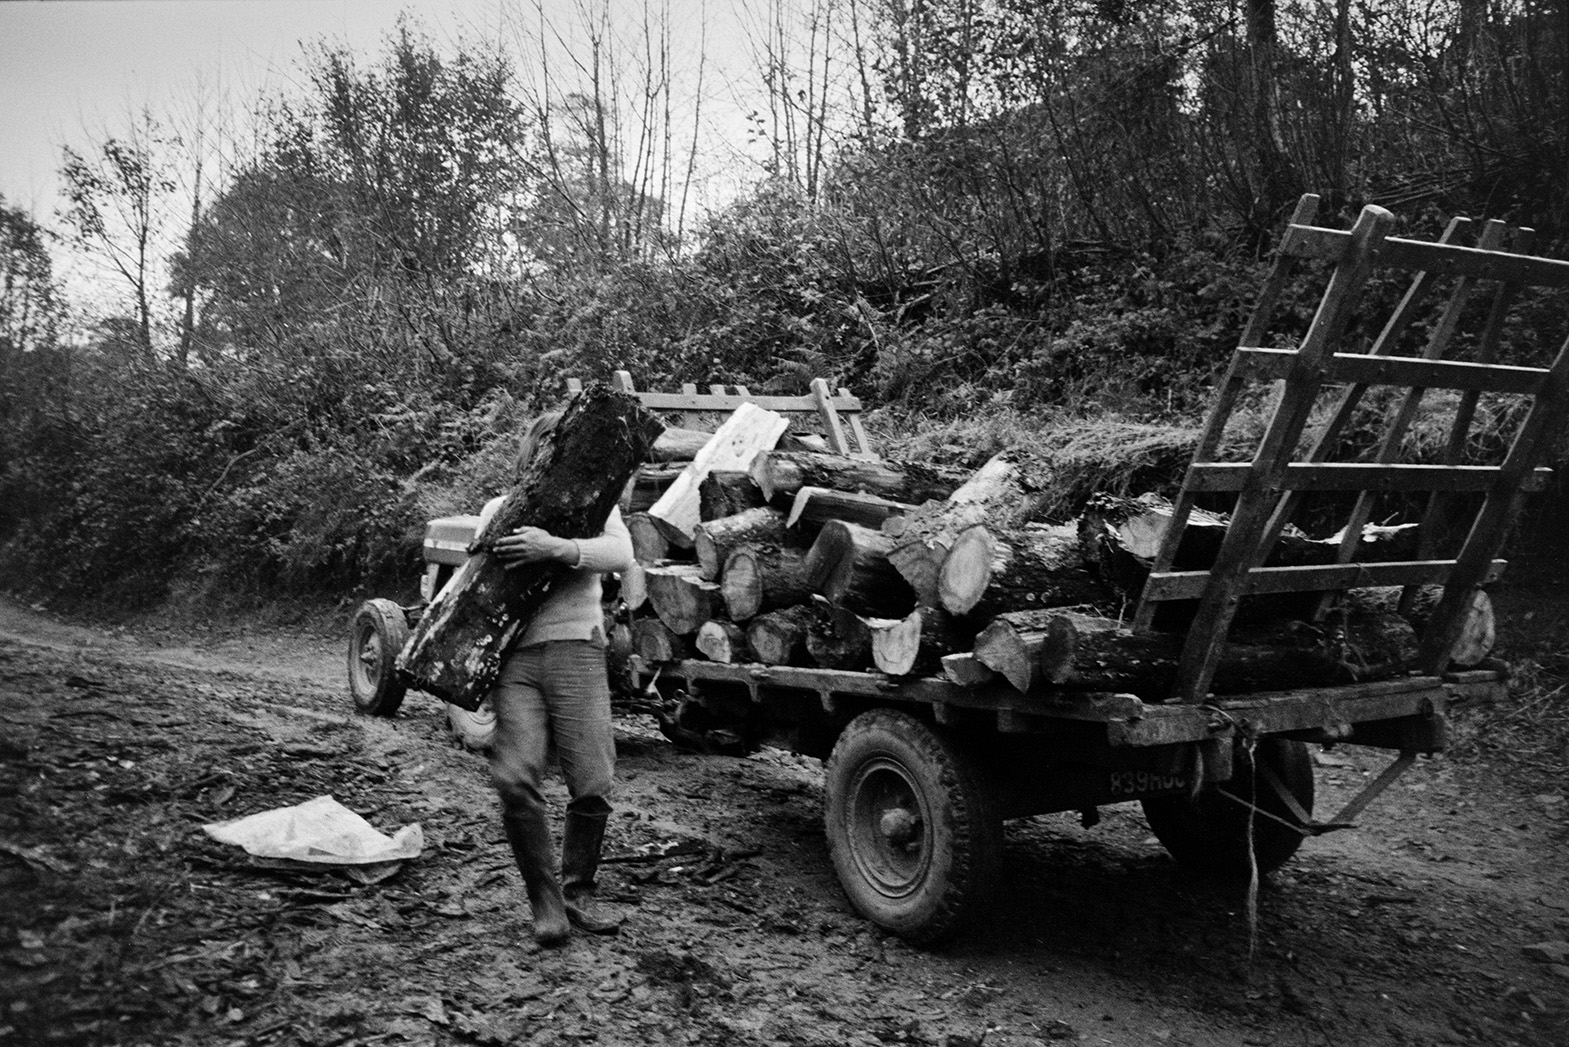 Derek Bright either loading or unloading logs onto a trailer near Kiverley, Beaford.